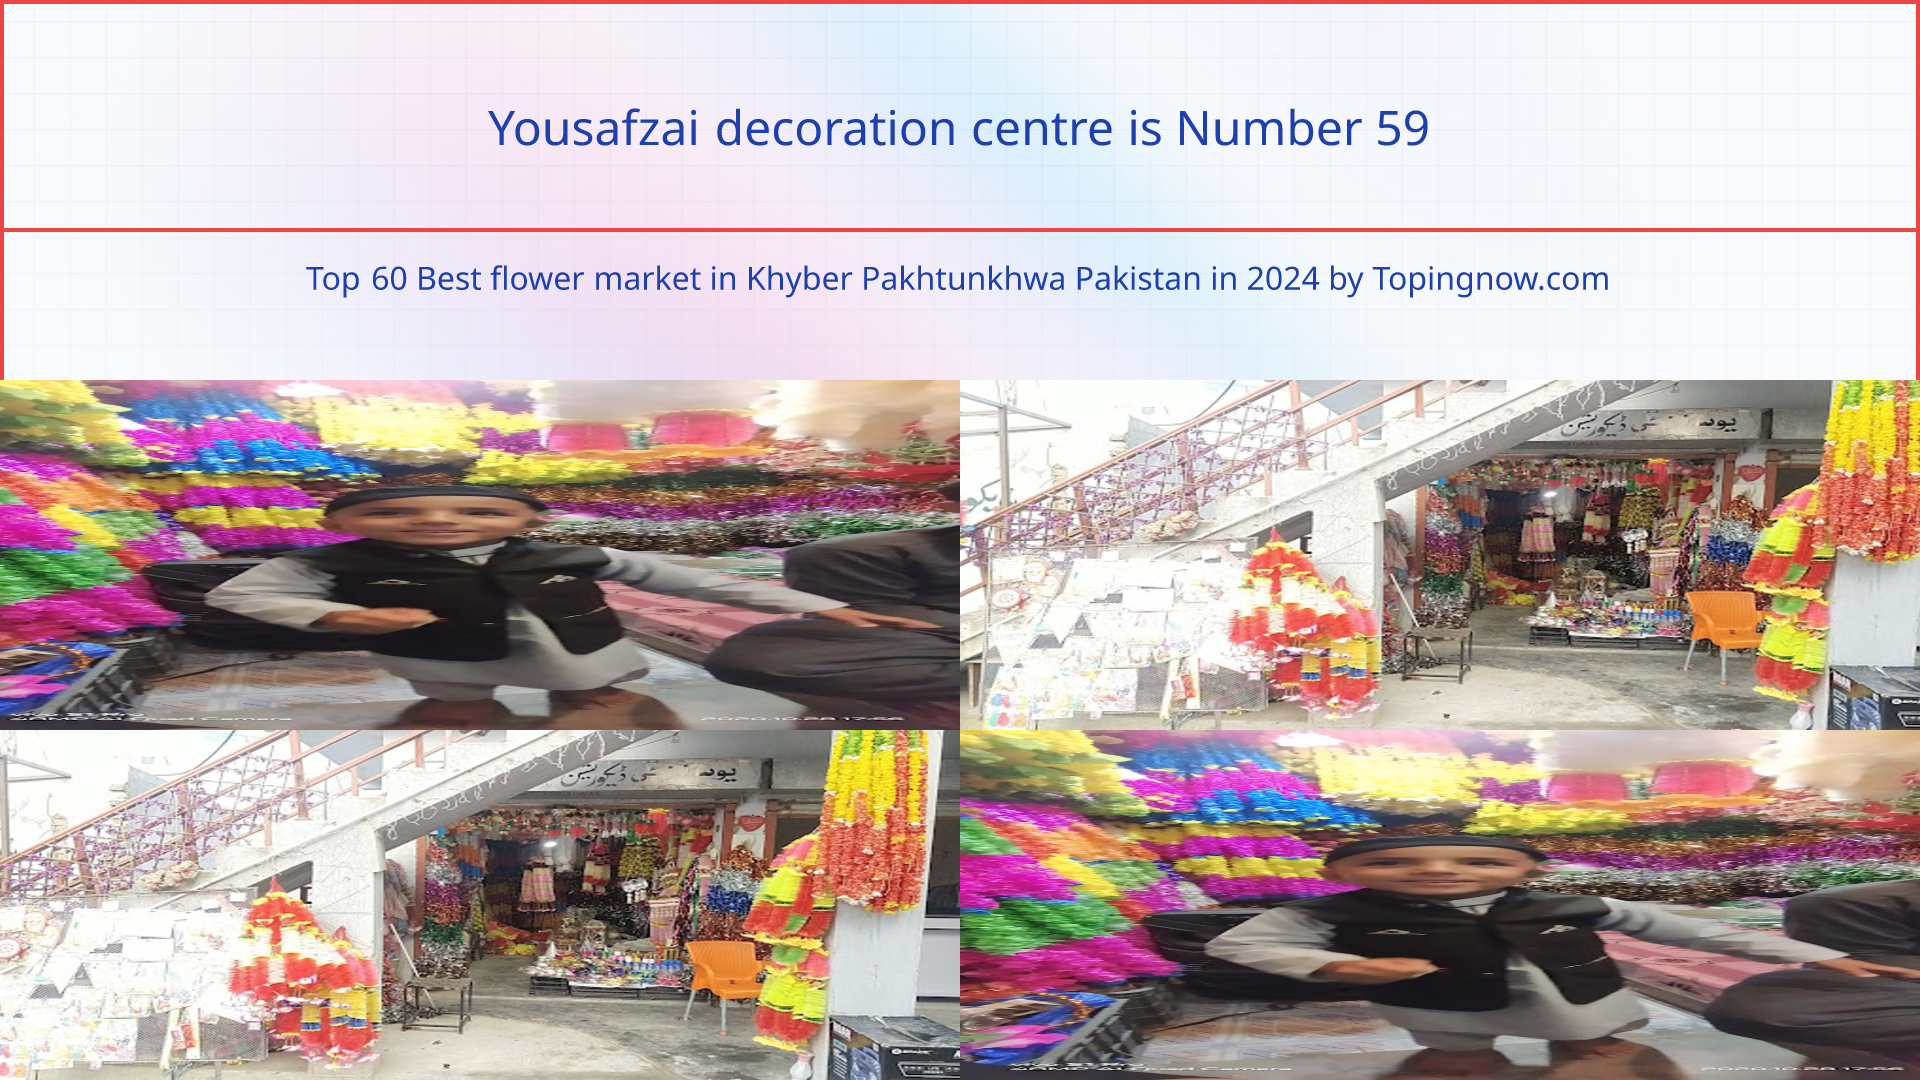 Yousafzai decoration centre: Top 60 Best flower market in Khyber Pakhtunkhwa Pakistan in 2024